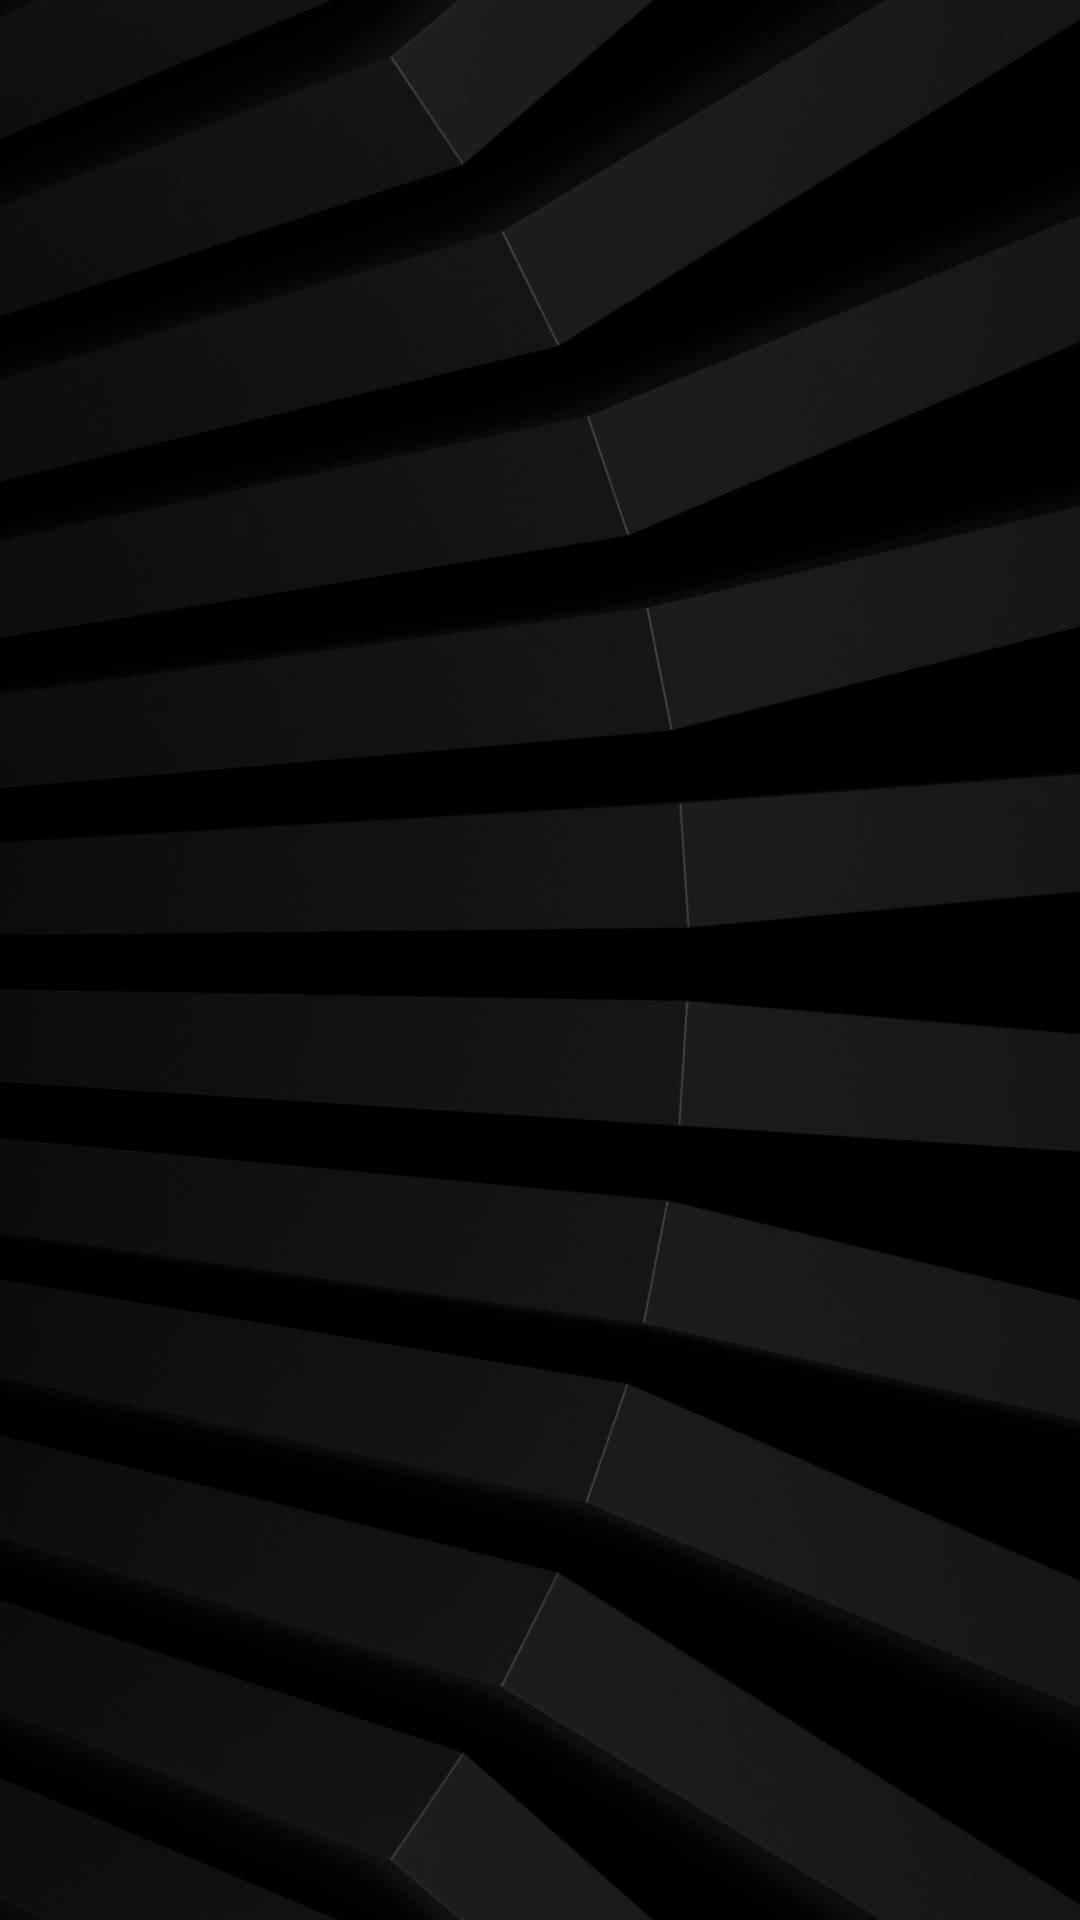 Repetitive Pattern Black Aesthetic Tumblr Iphone Wallpaper